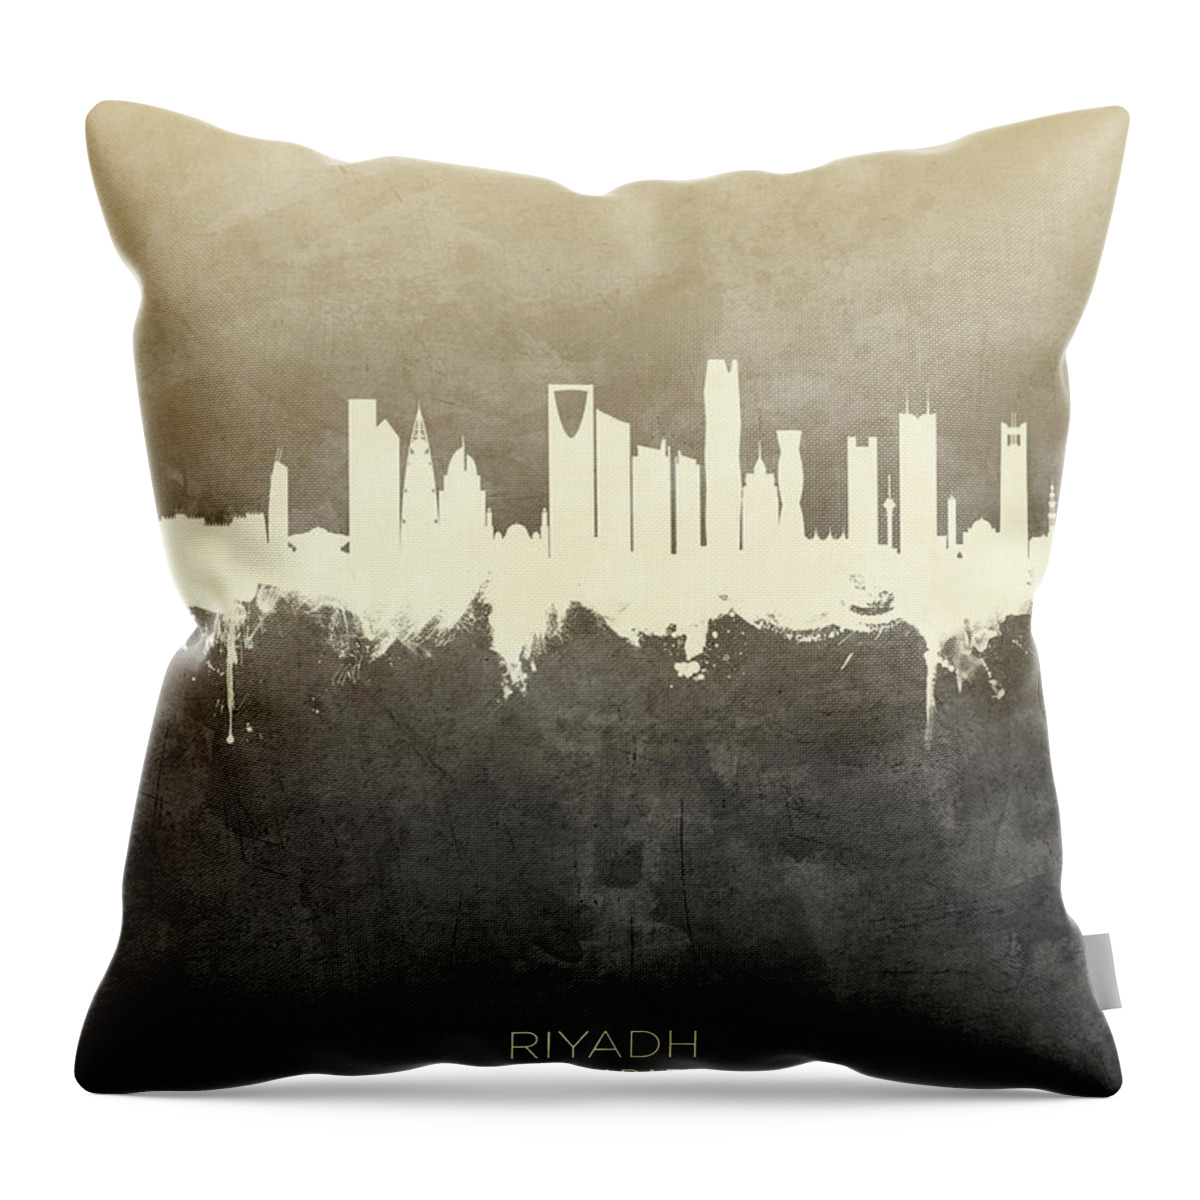 Riyadh Throw Pillow featuring the digital art Riyadh Saudi Arabia Skyline #32 by Michael Tompsett